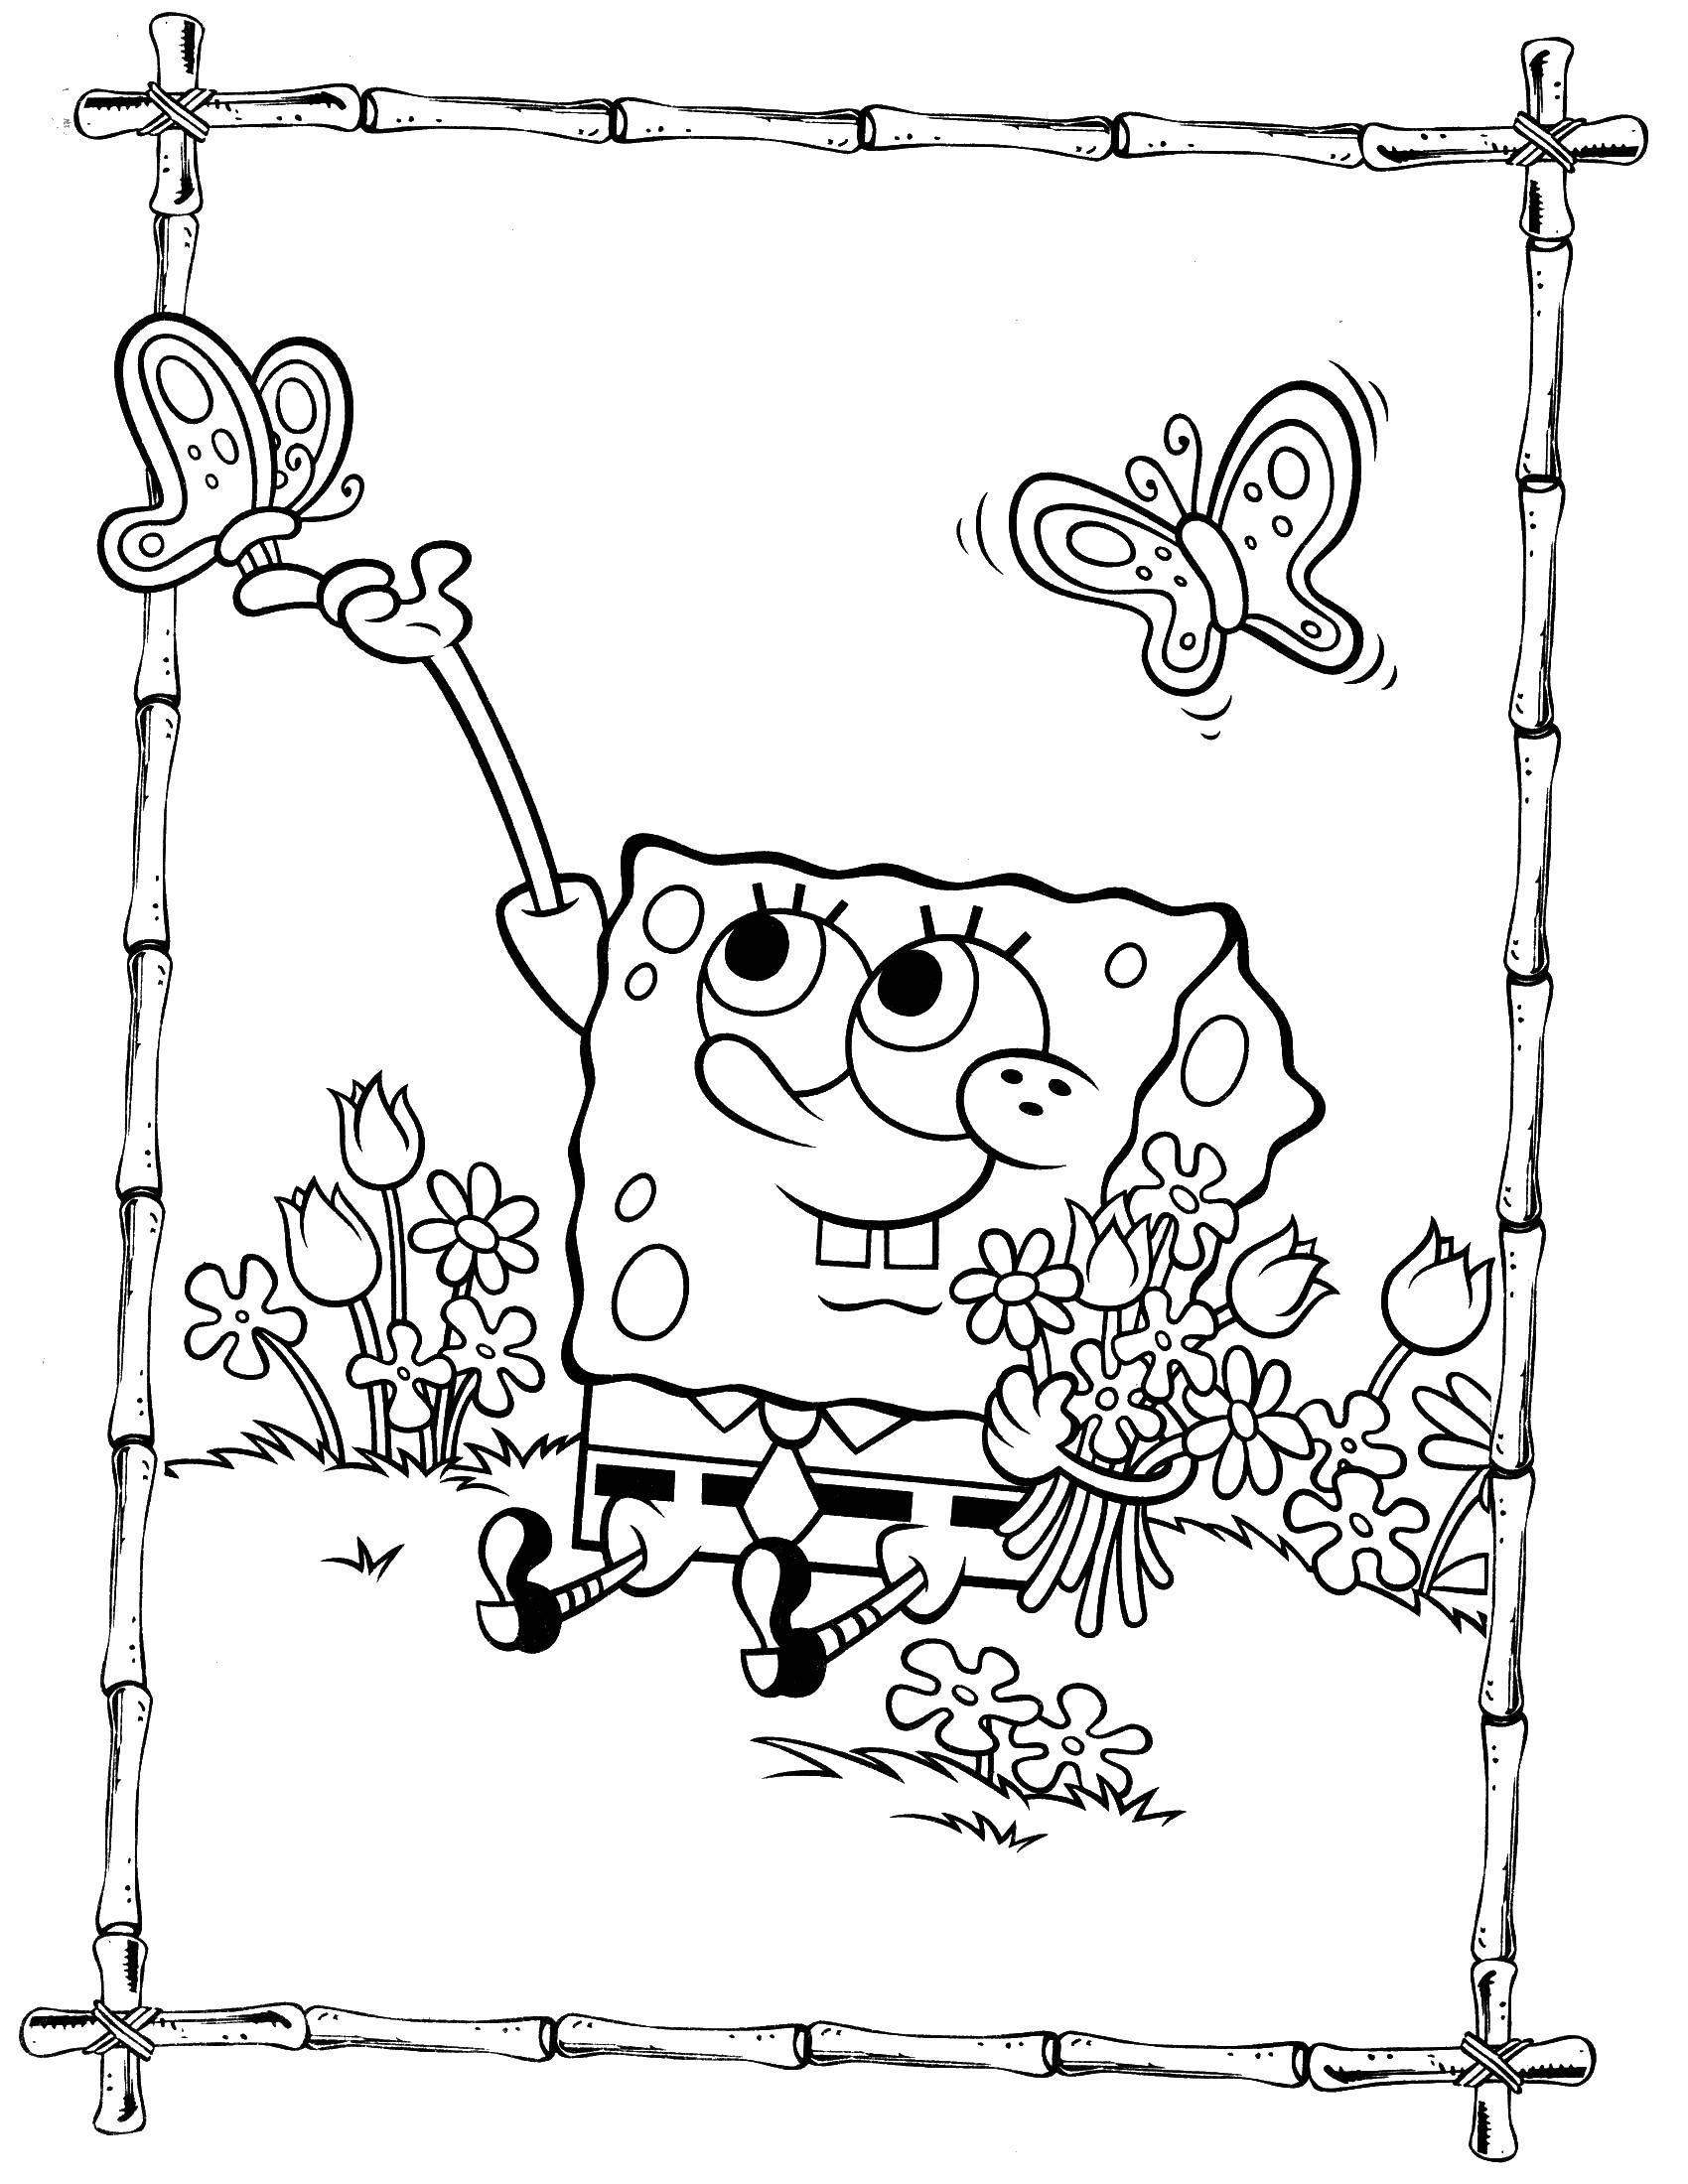 Coloring Spongebob catches butterflies. Category Spongebob. Tags:  spongebob, Patrick.